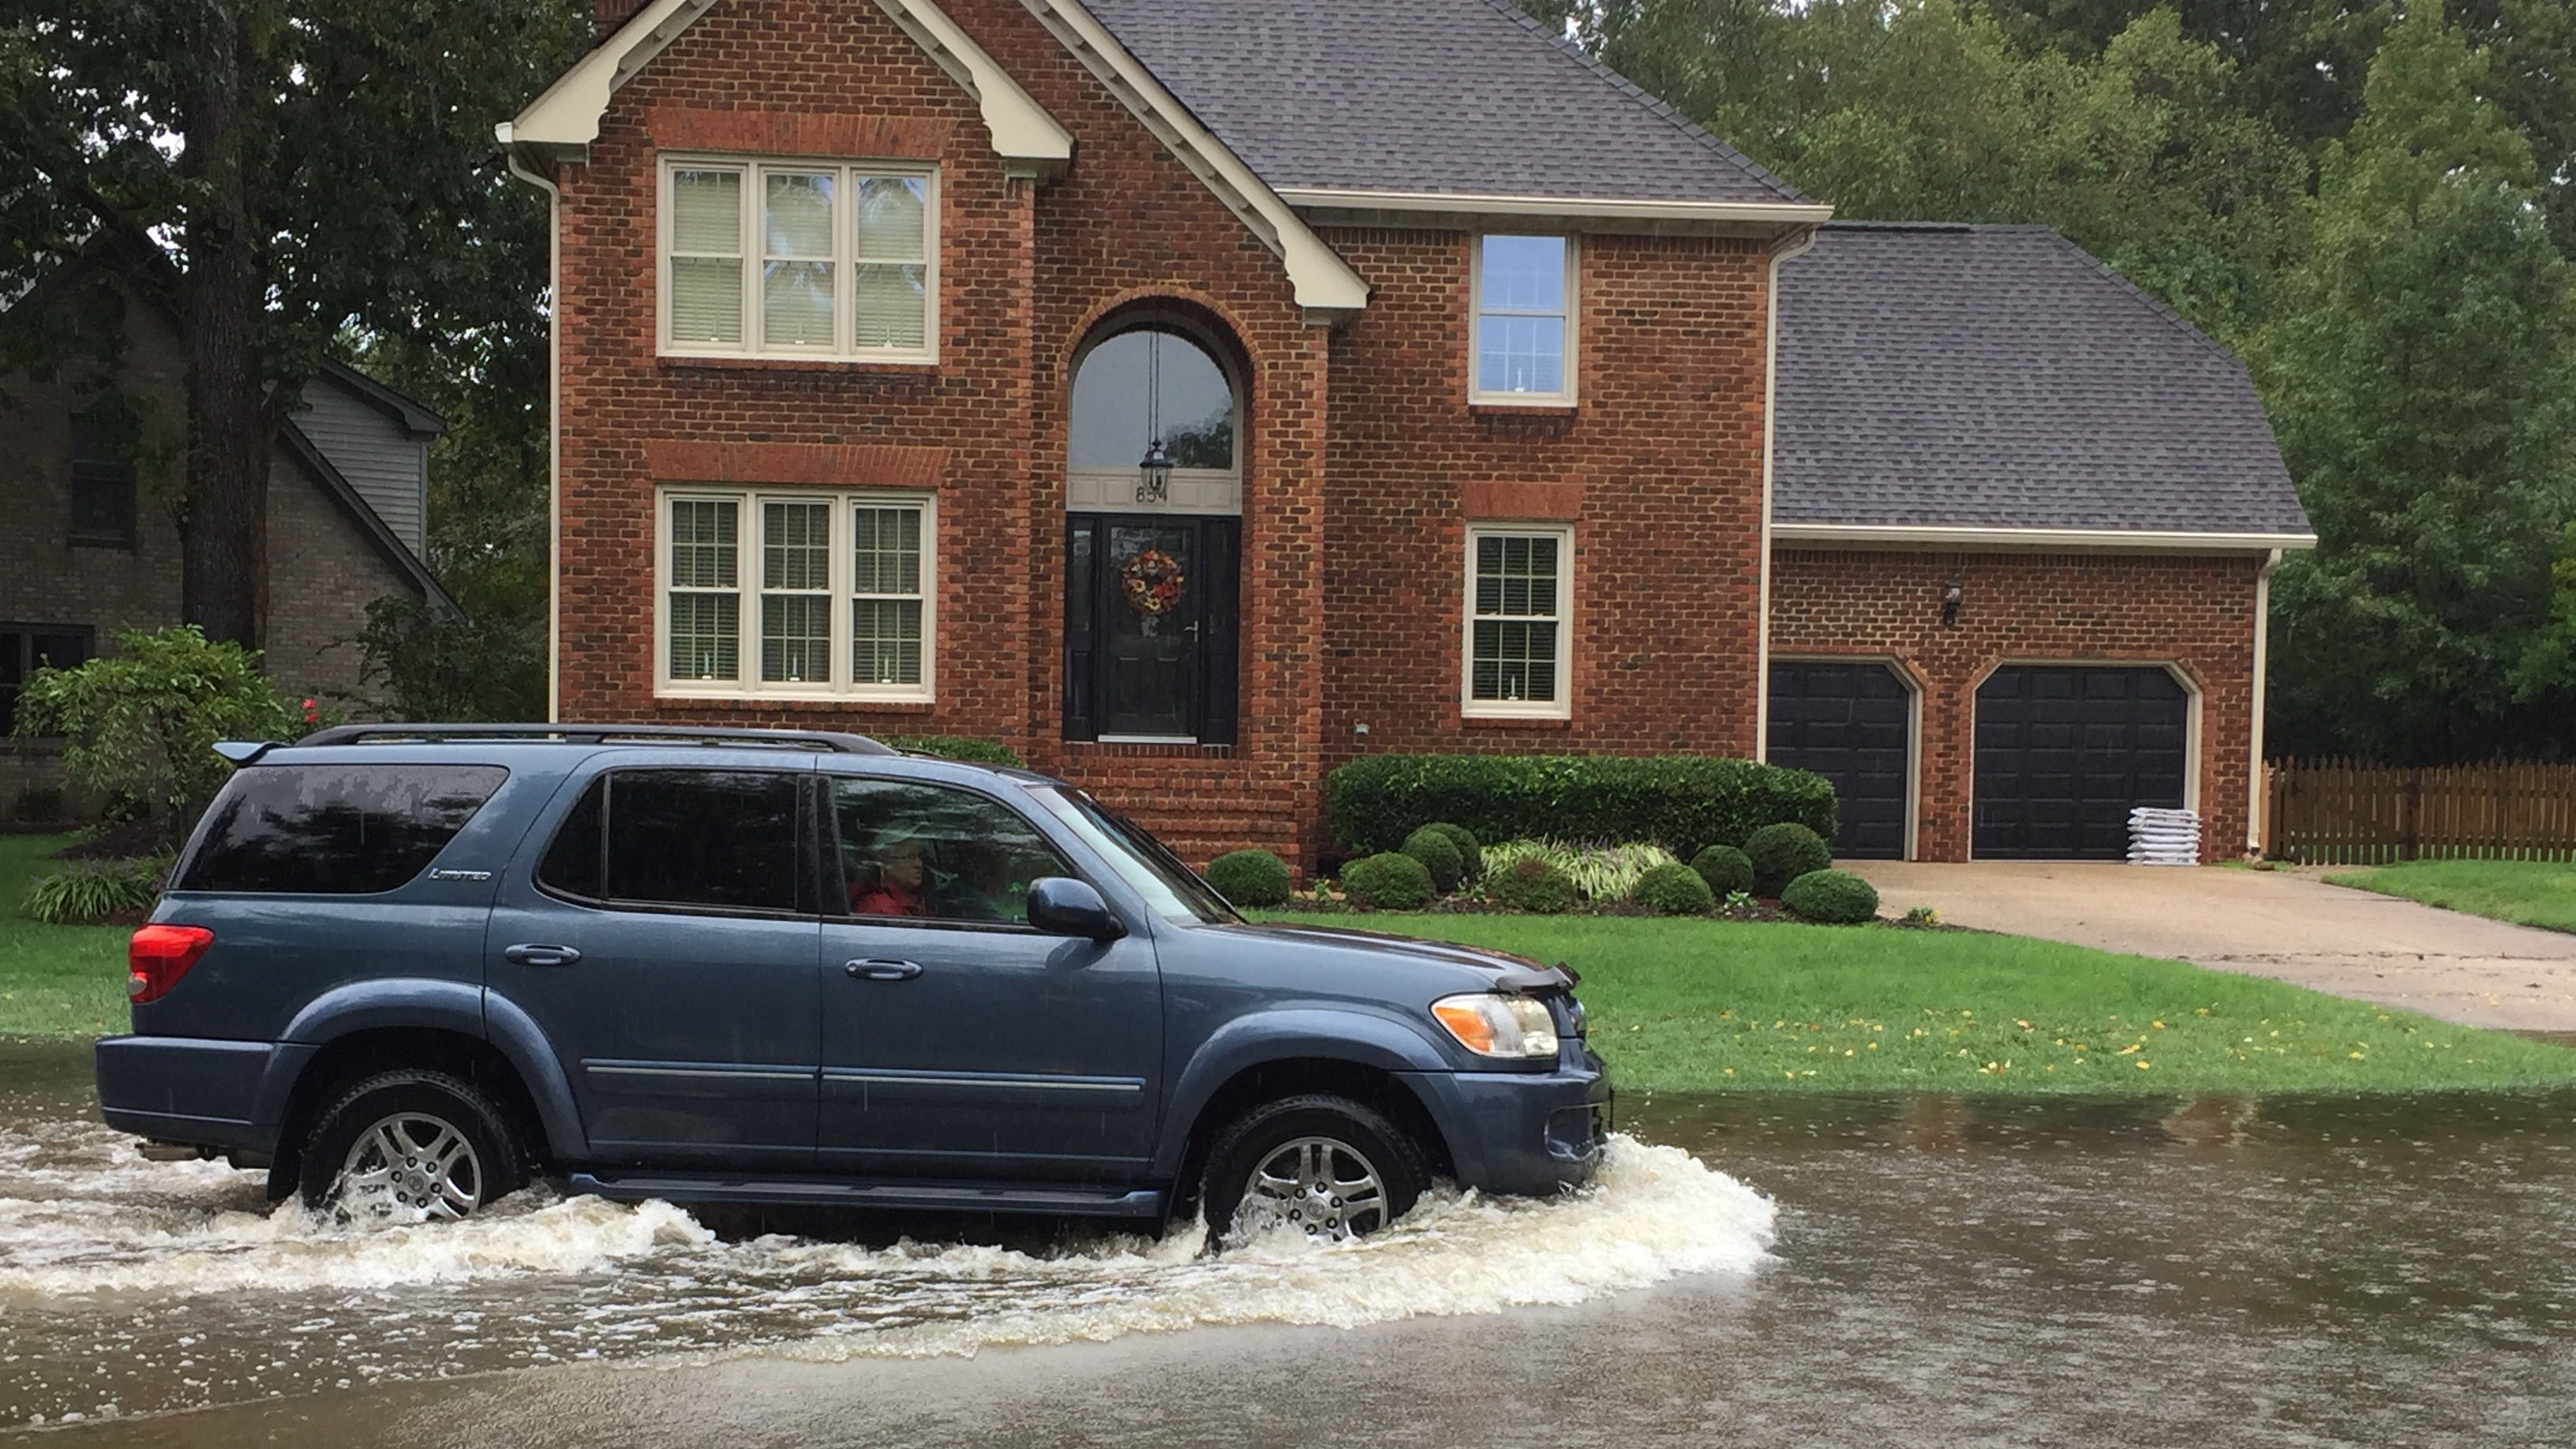 Flooding in the Great Bridge neighborhood of Chesapeake during a storm. (Image: Katherine Hafner)